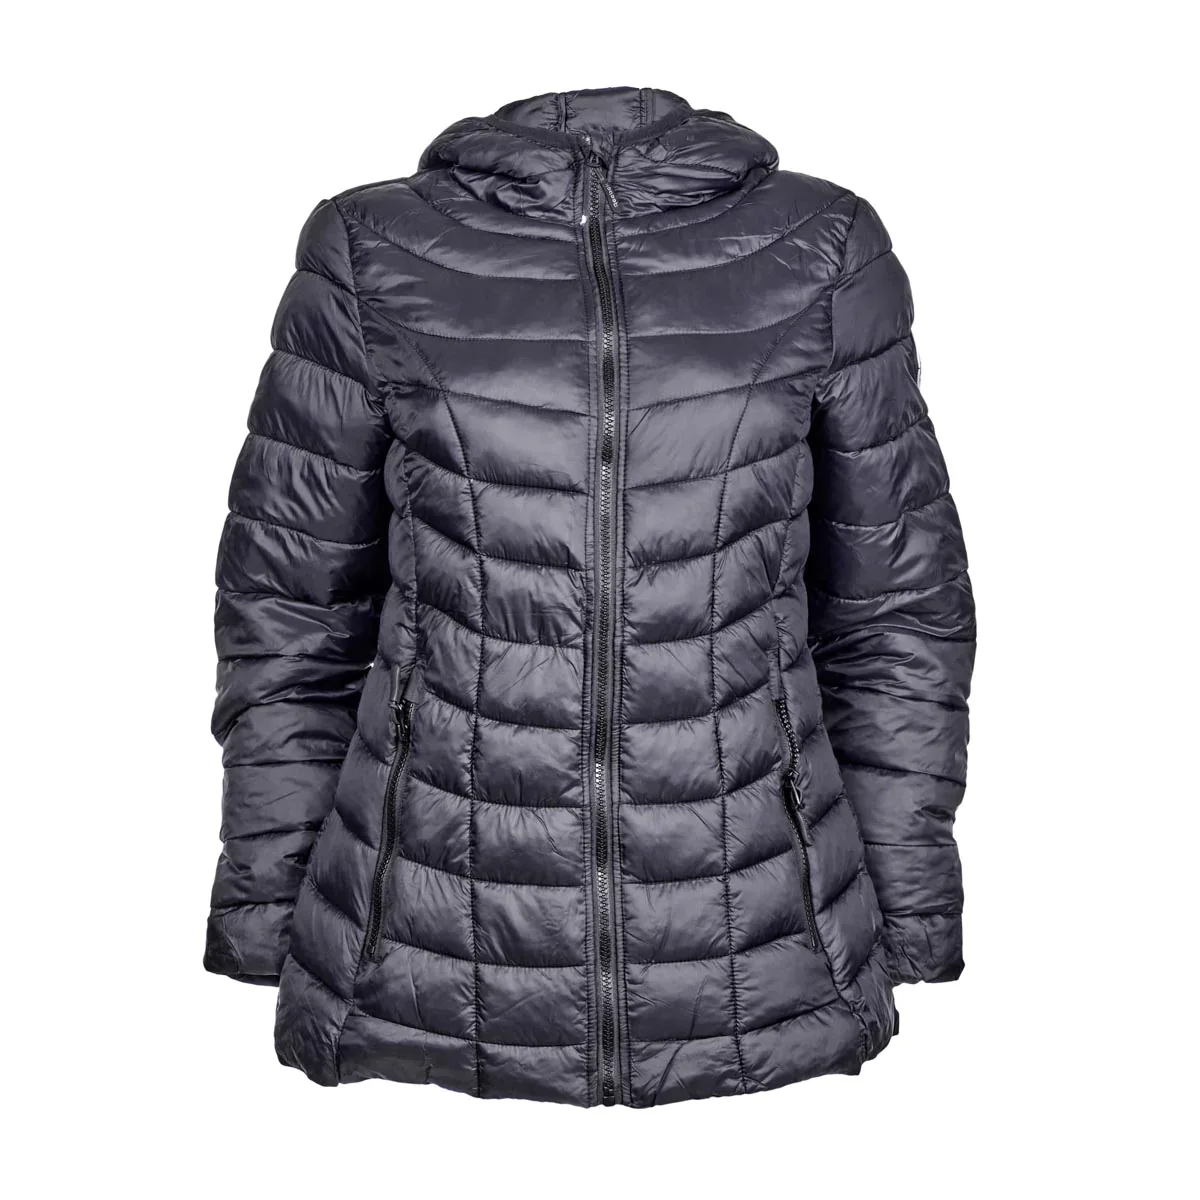 Image of Reebok Women's Glacier Shield Jacket with Hood